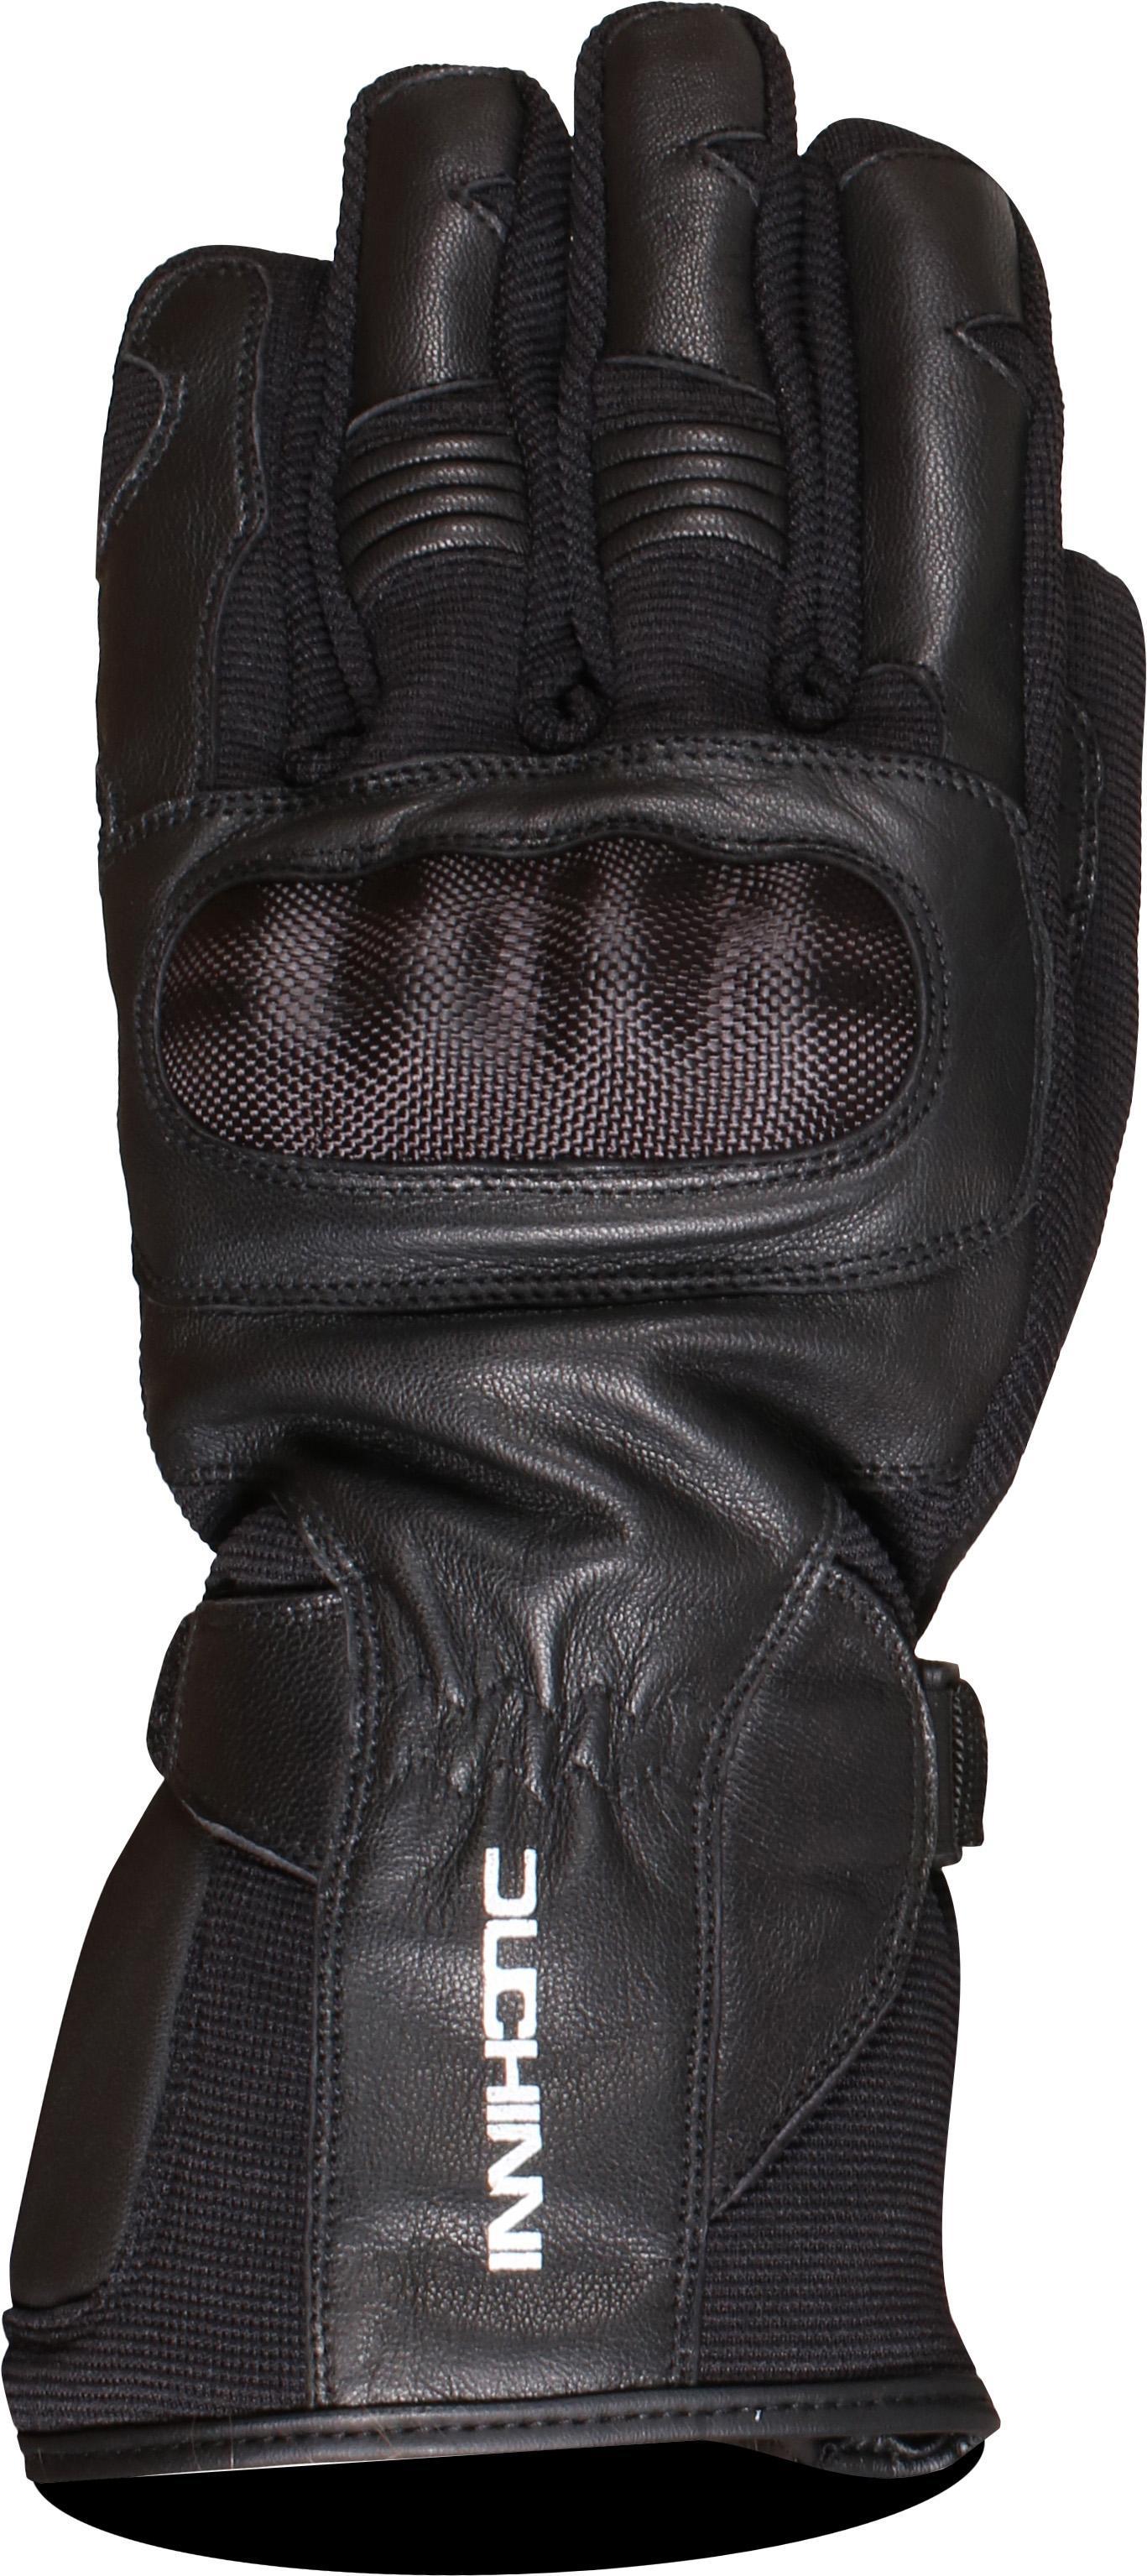 Duchinni Shadow Motorcycle Gloves - Black, M